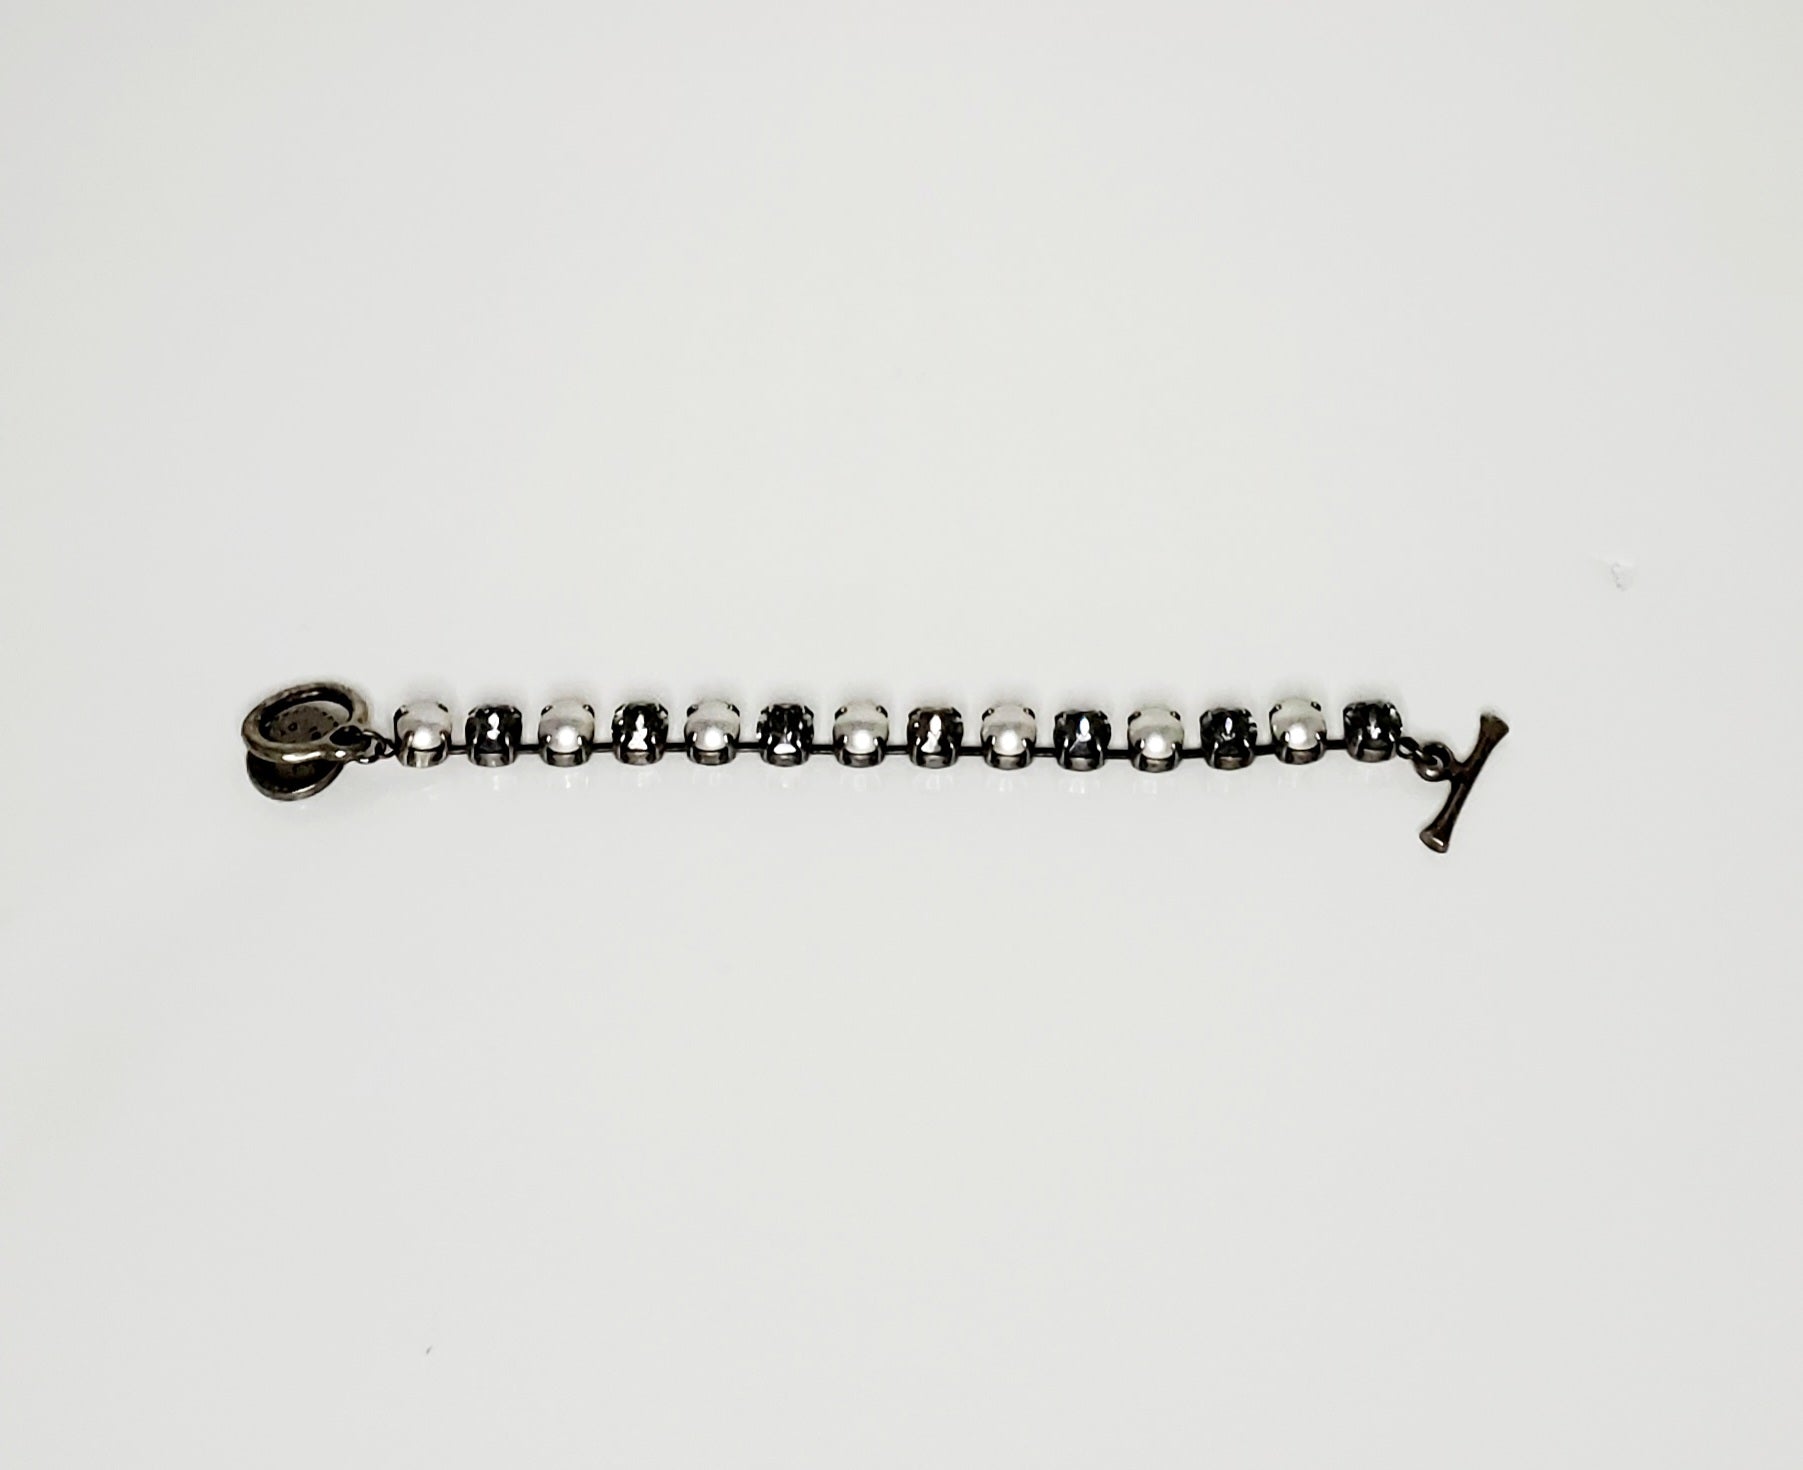 Bracelet Rebekah Price 12-13361-322